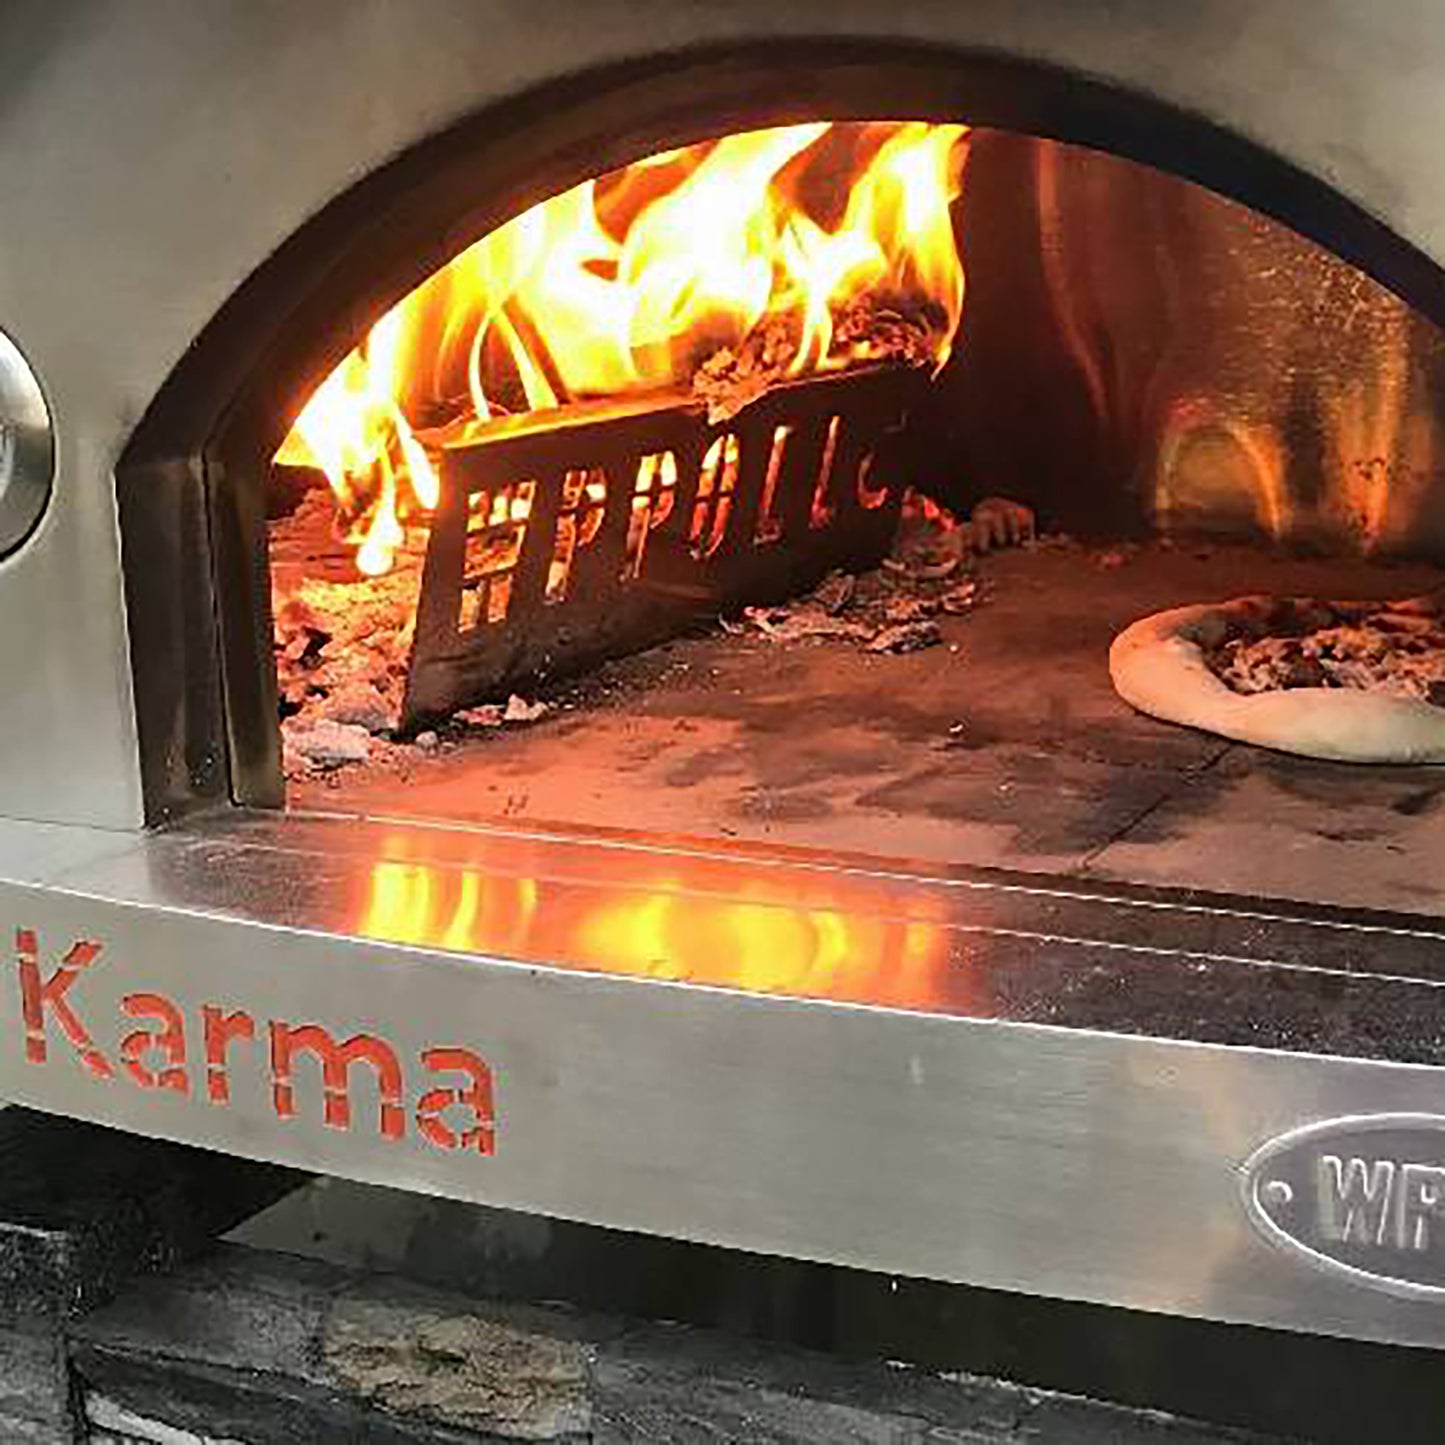 Karma 42 - 304SS Pizza Oven